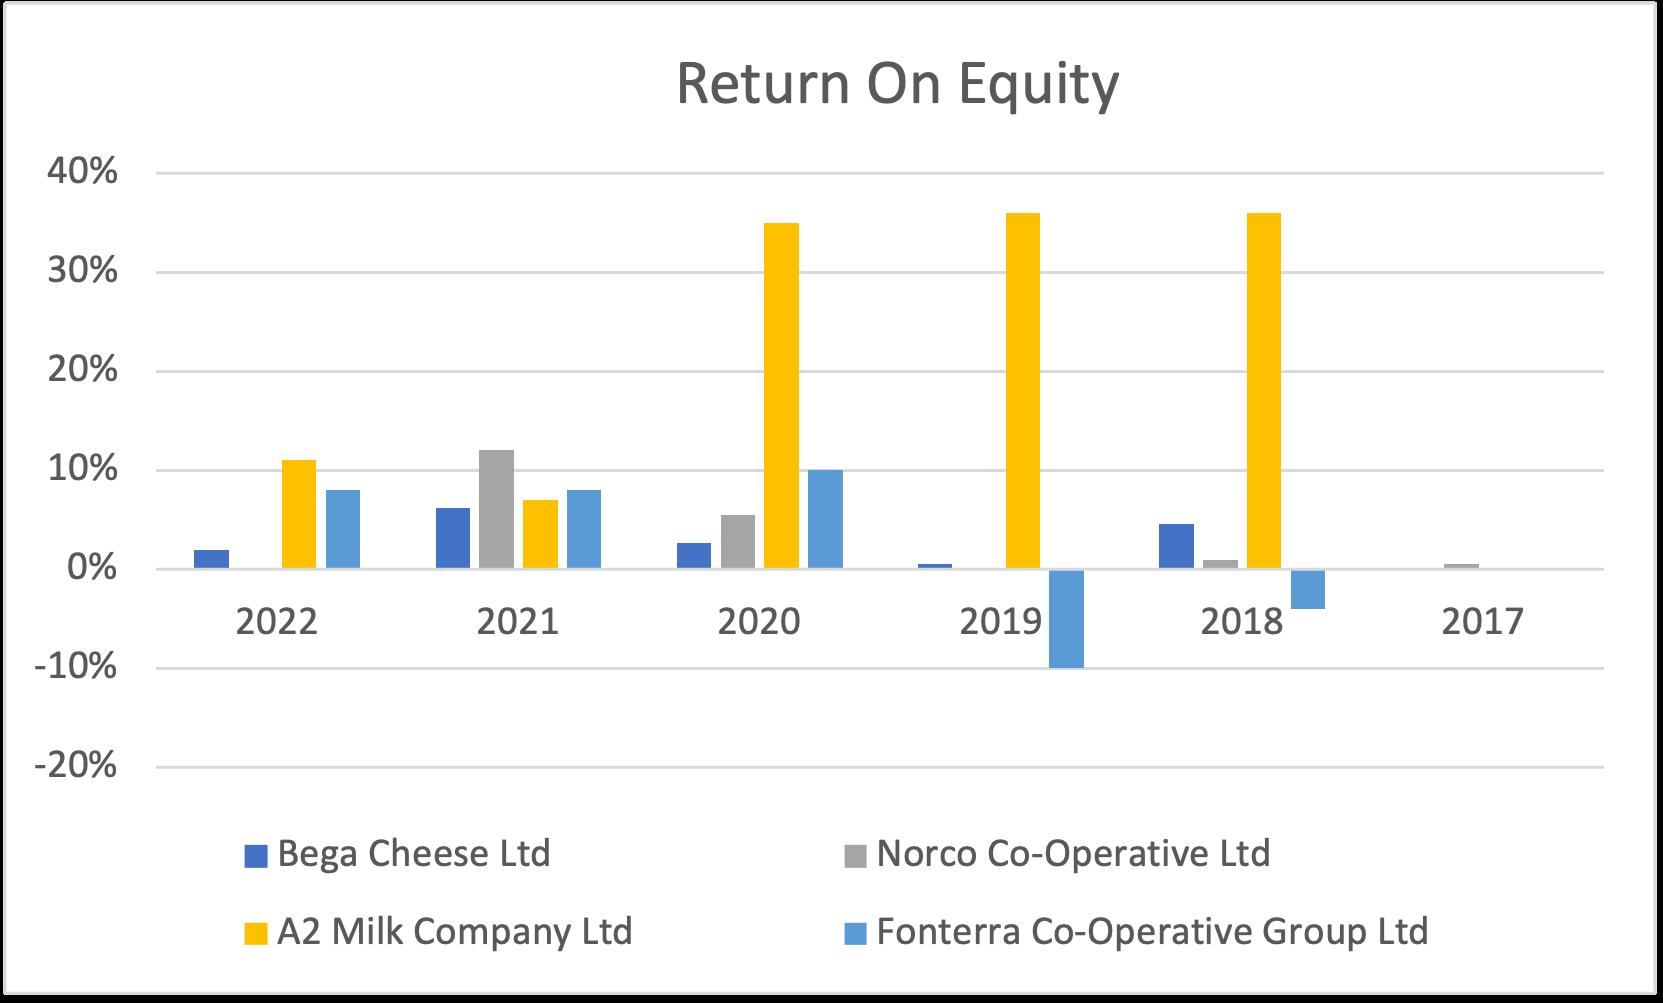 Return On Equity Bega Cheese Ltd Jorco Co-Operative Ltd A2 Milk Company Ltd -onterra Co-Operative Group Ltd